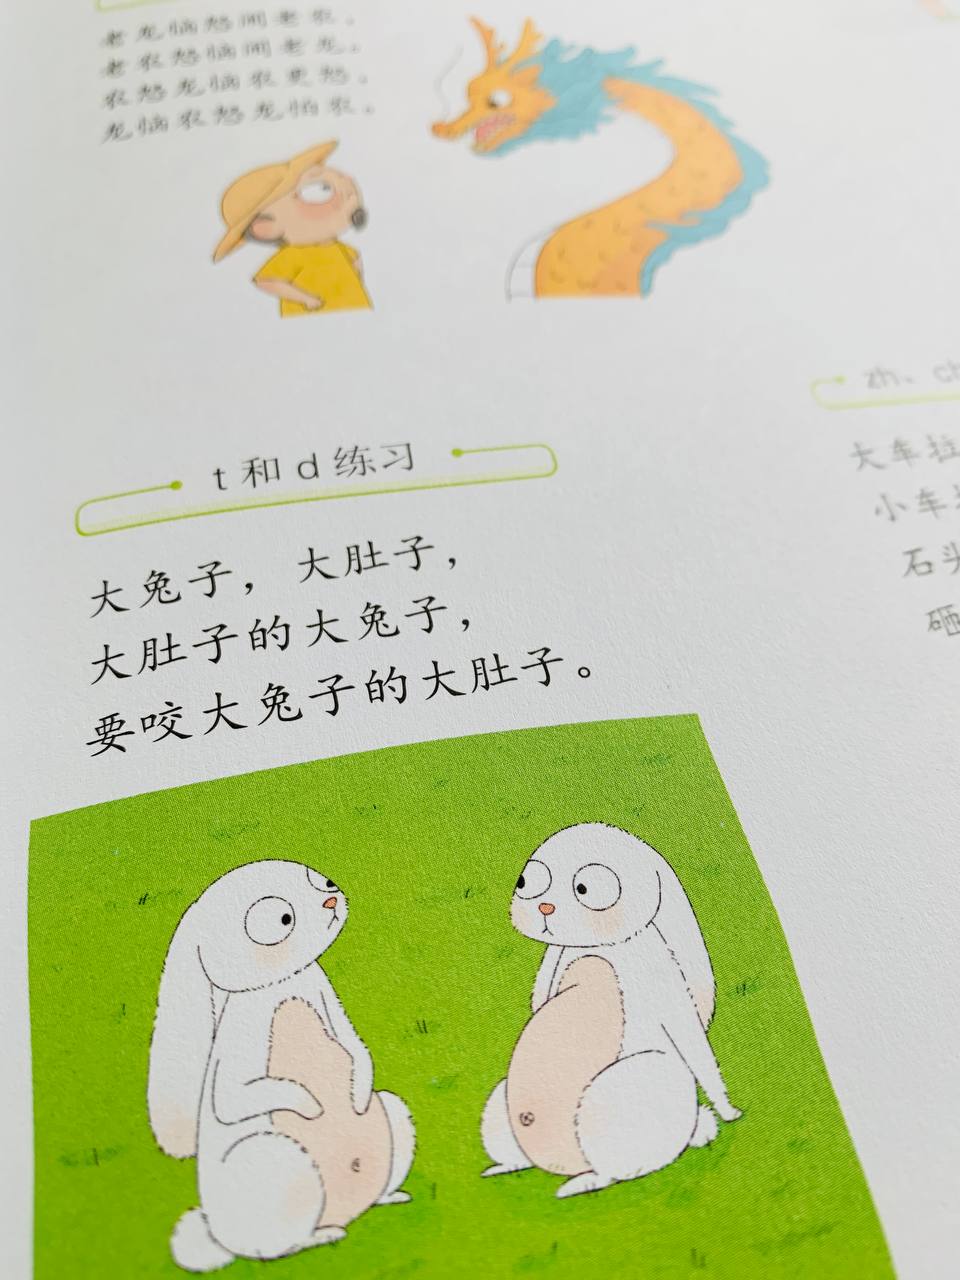 歪歪兔 语言表达课 Waiwai Rabbit Language Expression Class (Set of 4)